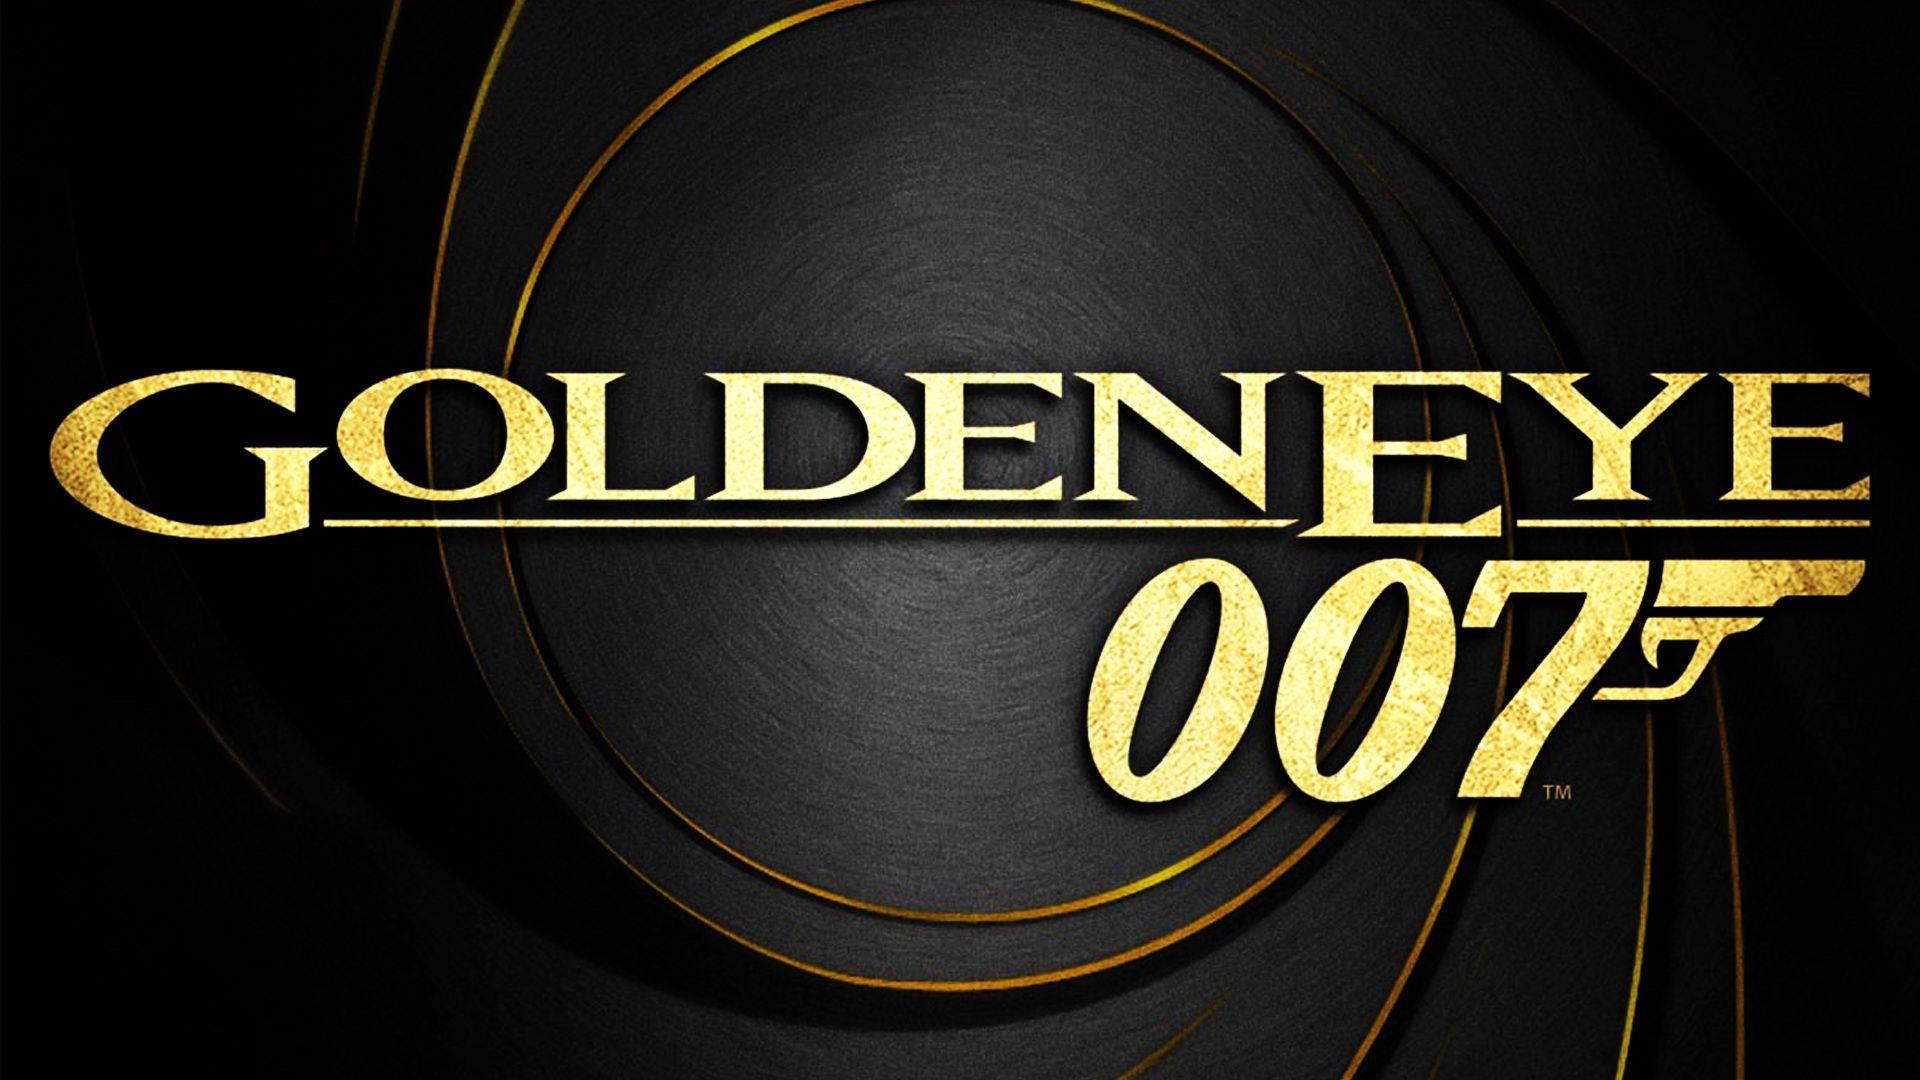 Video Game GoldenEye 007 wallpaper Desktop, Phone, Tablet